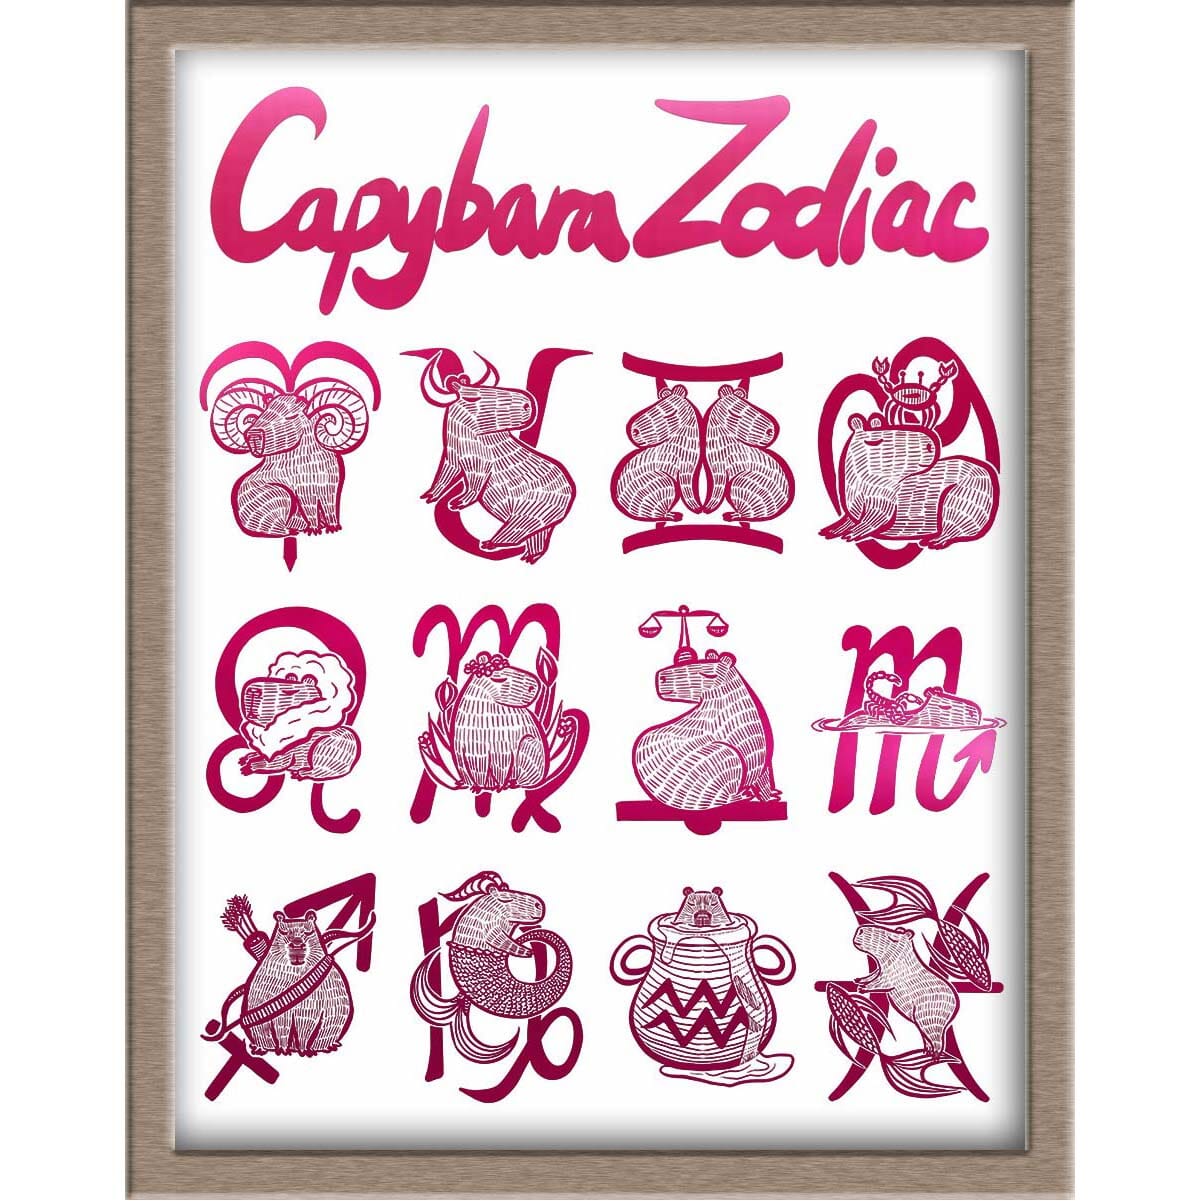 All the Capybara Zodiac Signs Foiled Print (Vertical with Title) Posters, Prints, & Visual Artwork JoyousJoyfulJoyness 